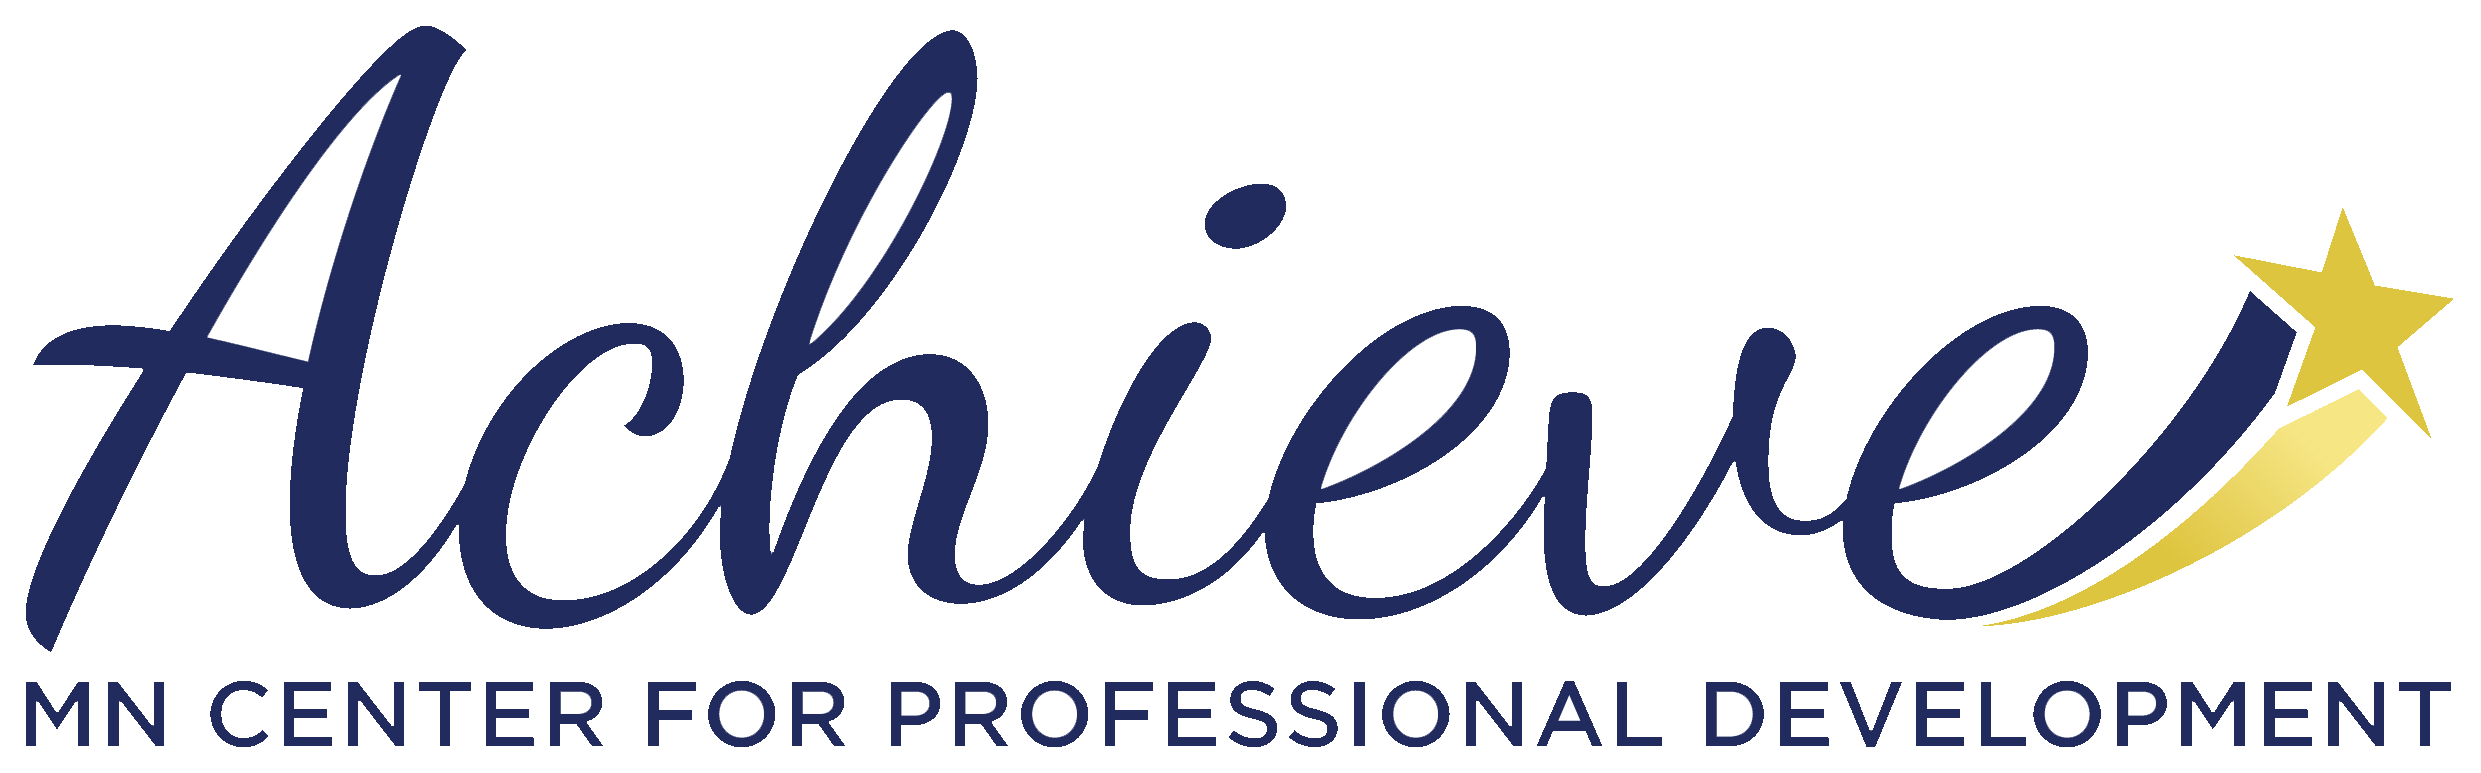 Logo link to Achieve MN Center for Professional Development